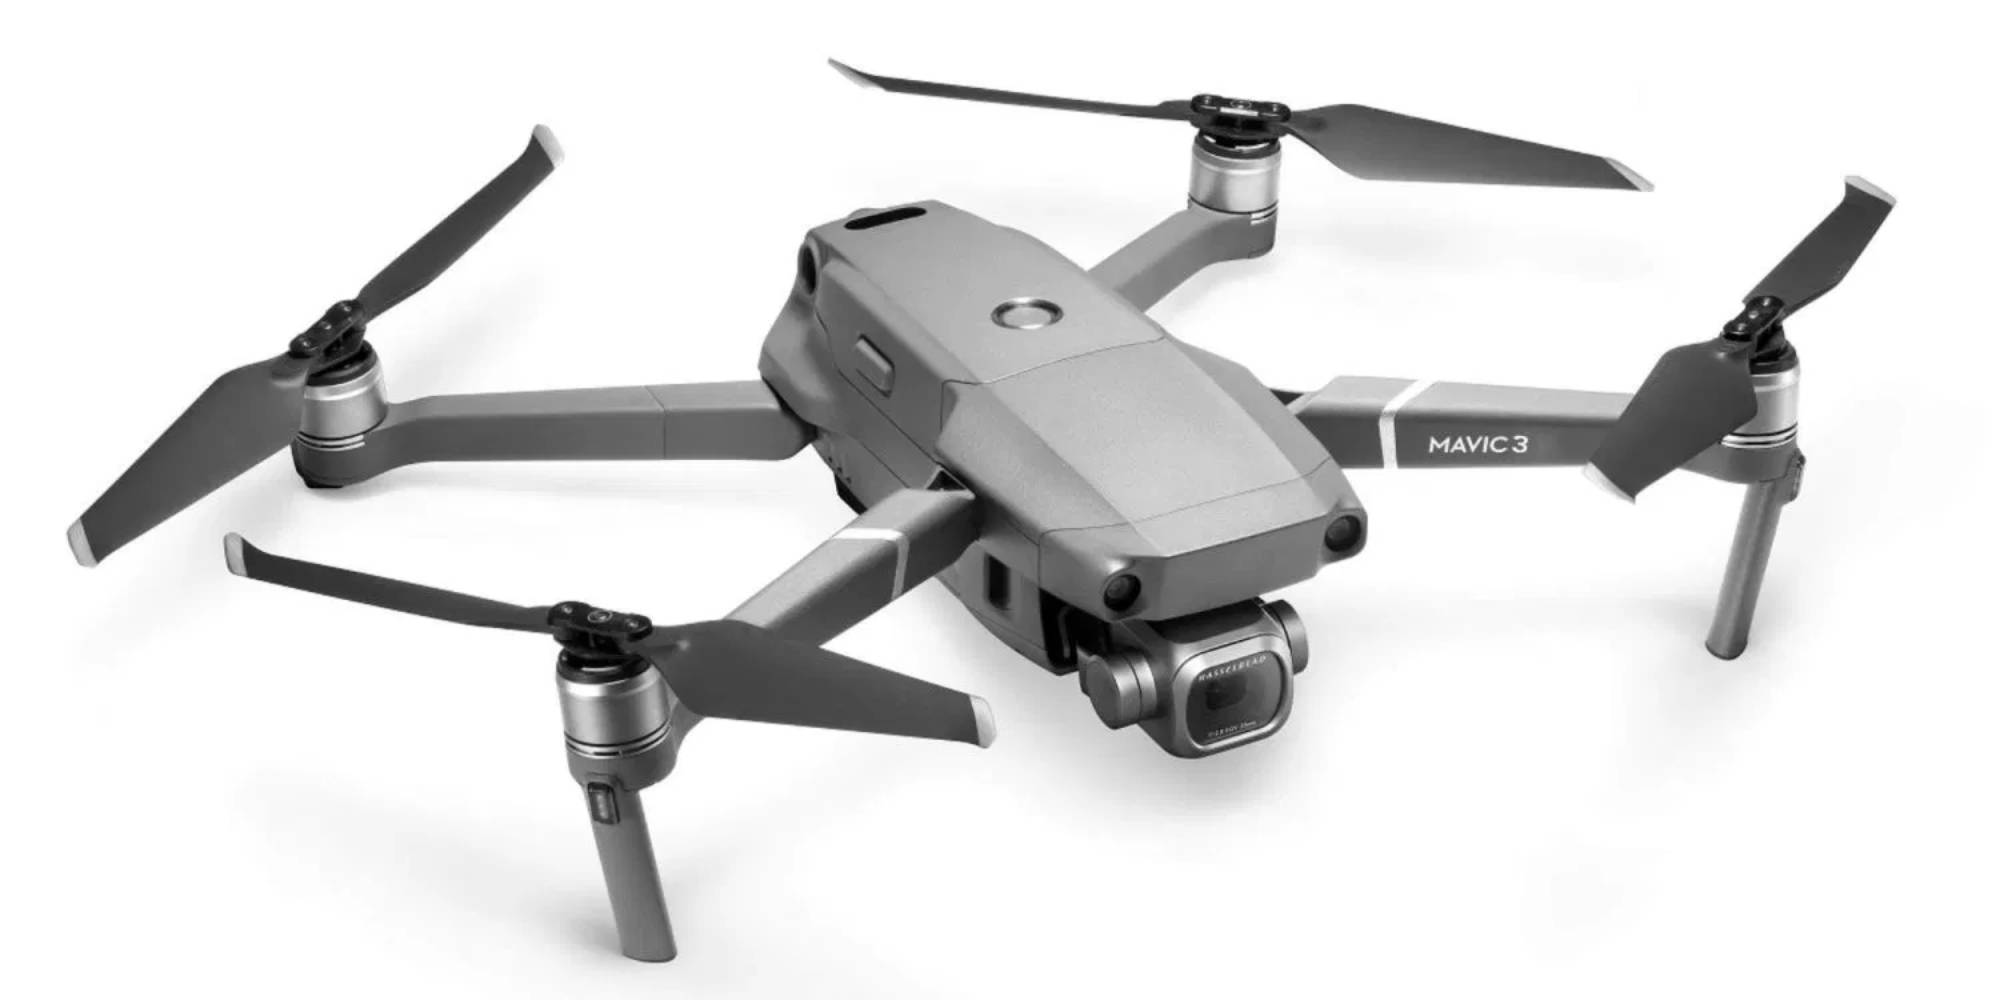 the latest dji drone